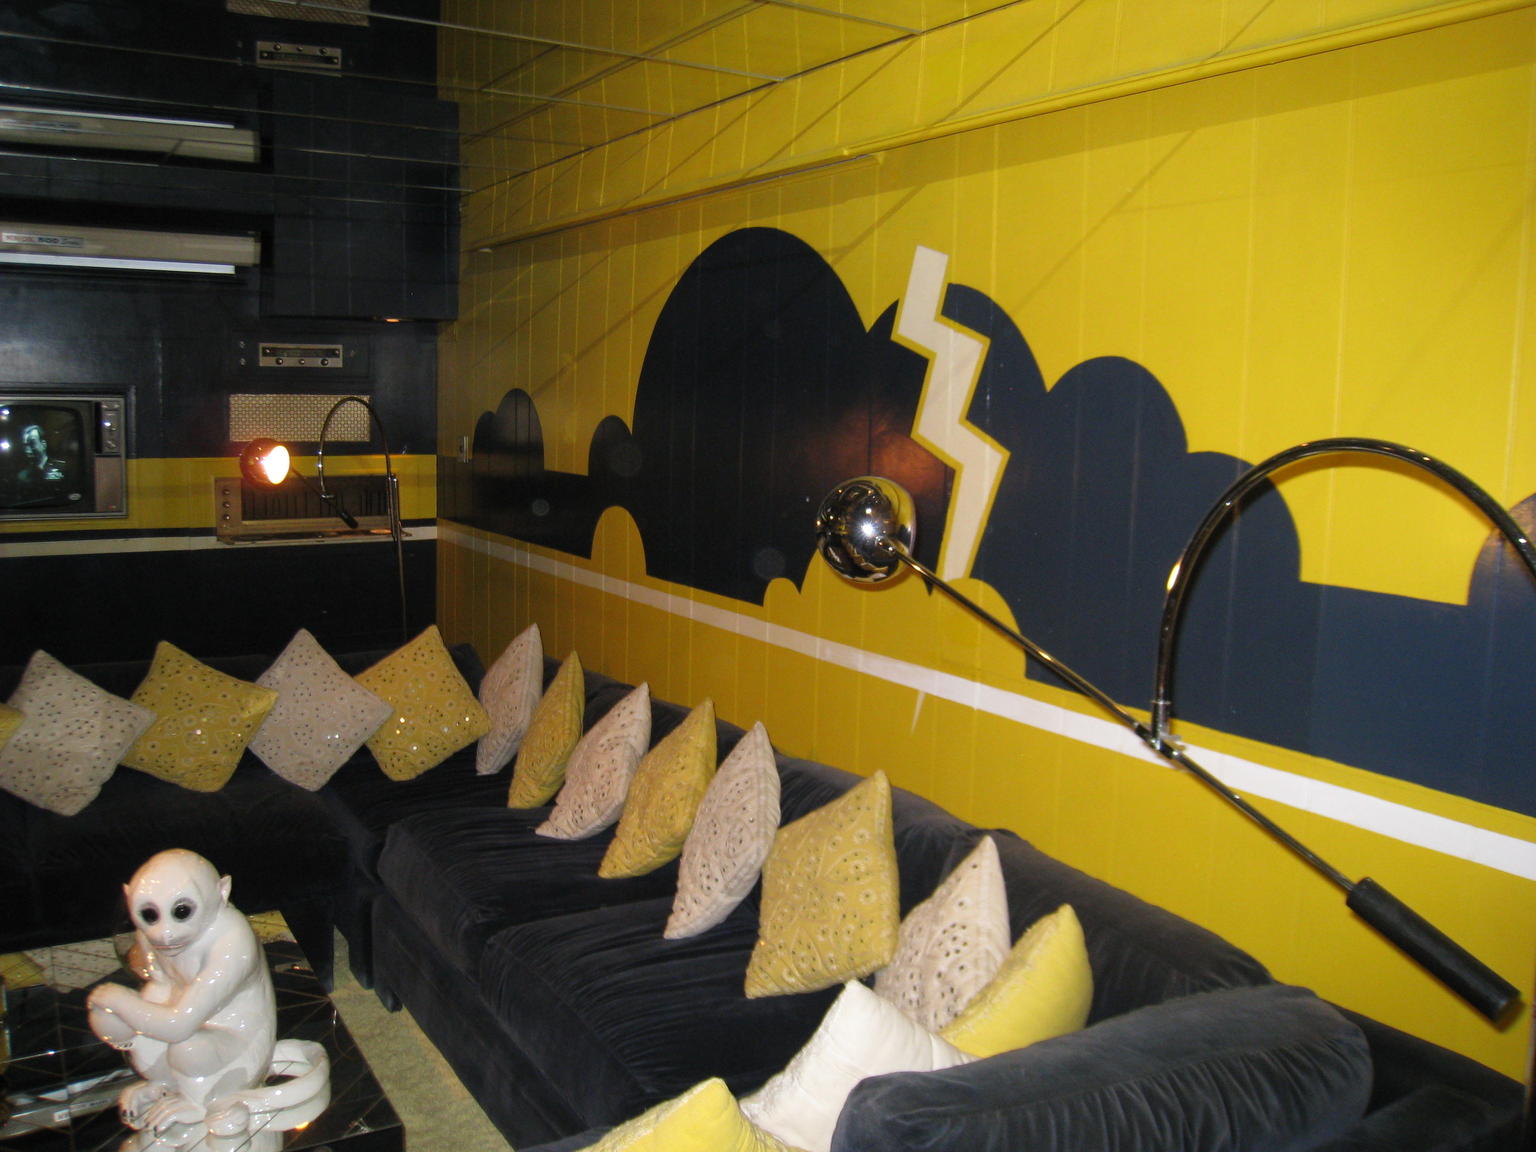 Elvis Presley's entertainment center in the basement of Graceland